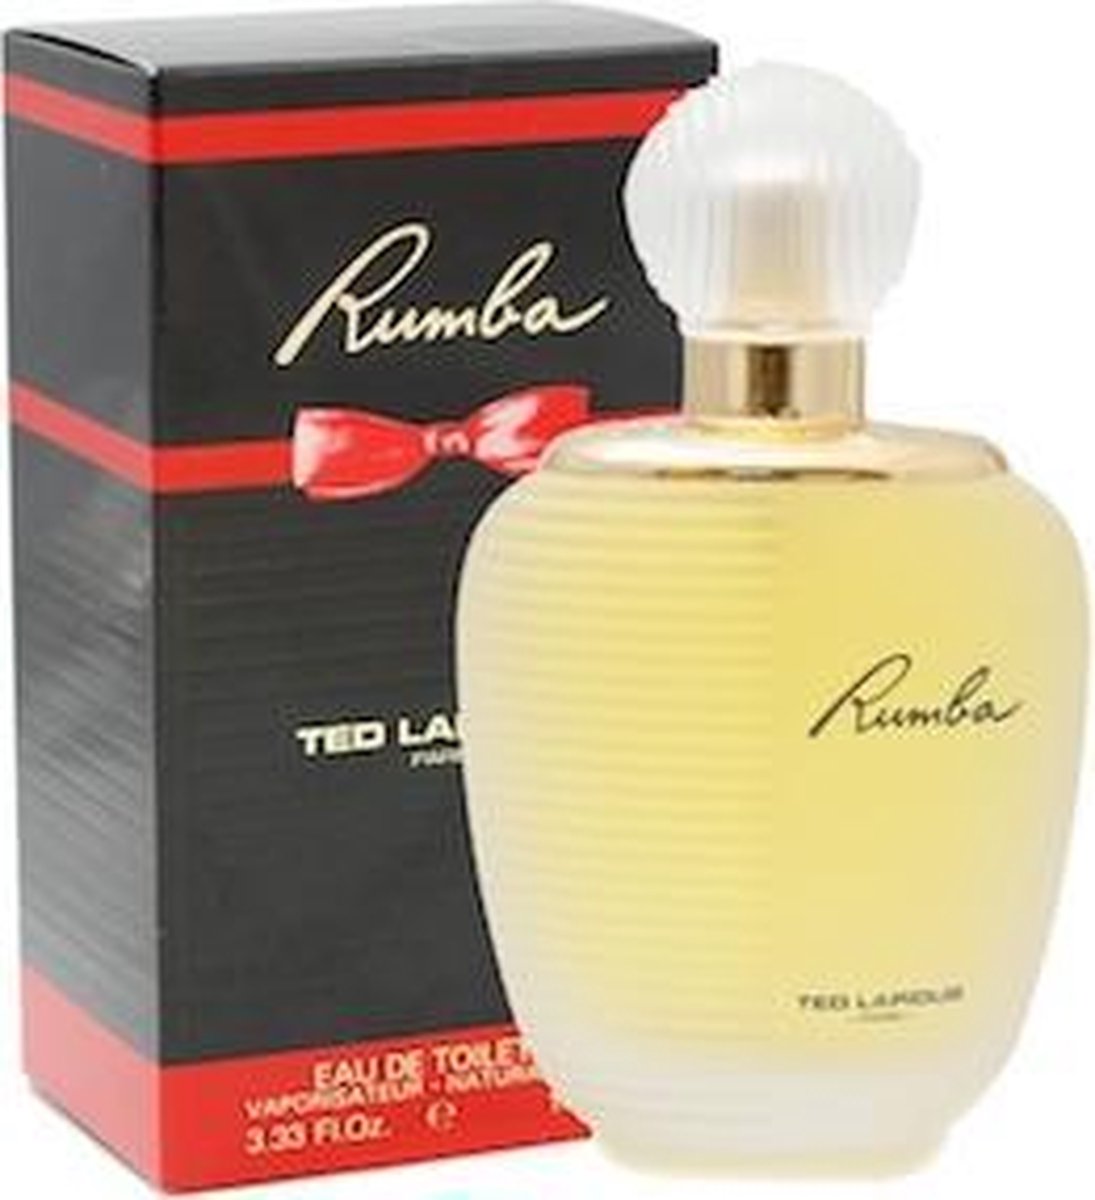 La Rumba Perfume Outlet, SAVE 34% - raptorunderlayment.com